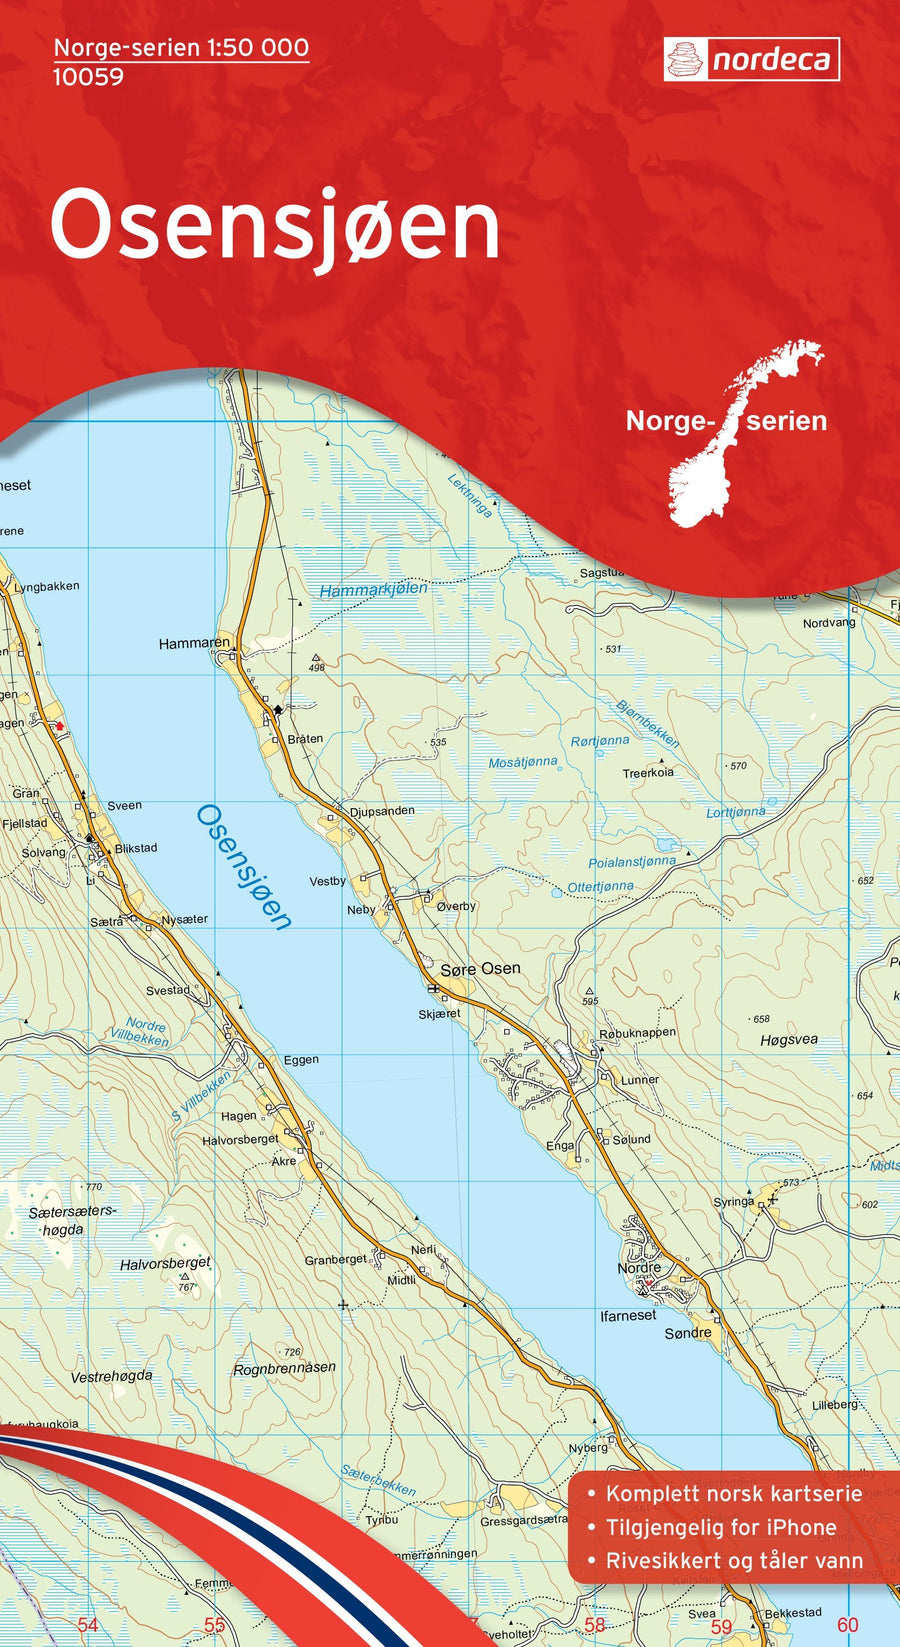 Carte de randonnée n° 10059 - Osensjoen (Norvège) | Nordeca - Norge-serien carte pliée Nordeca 